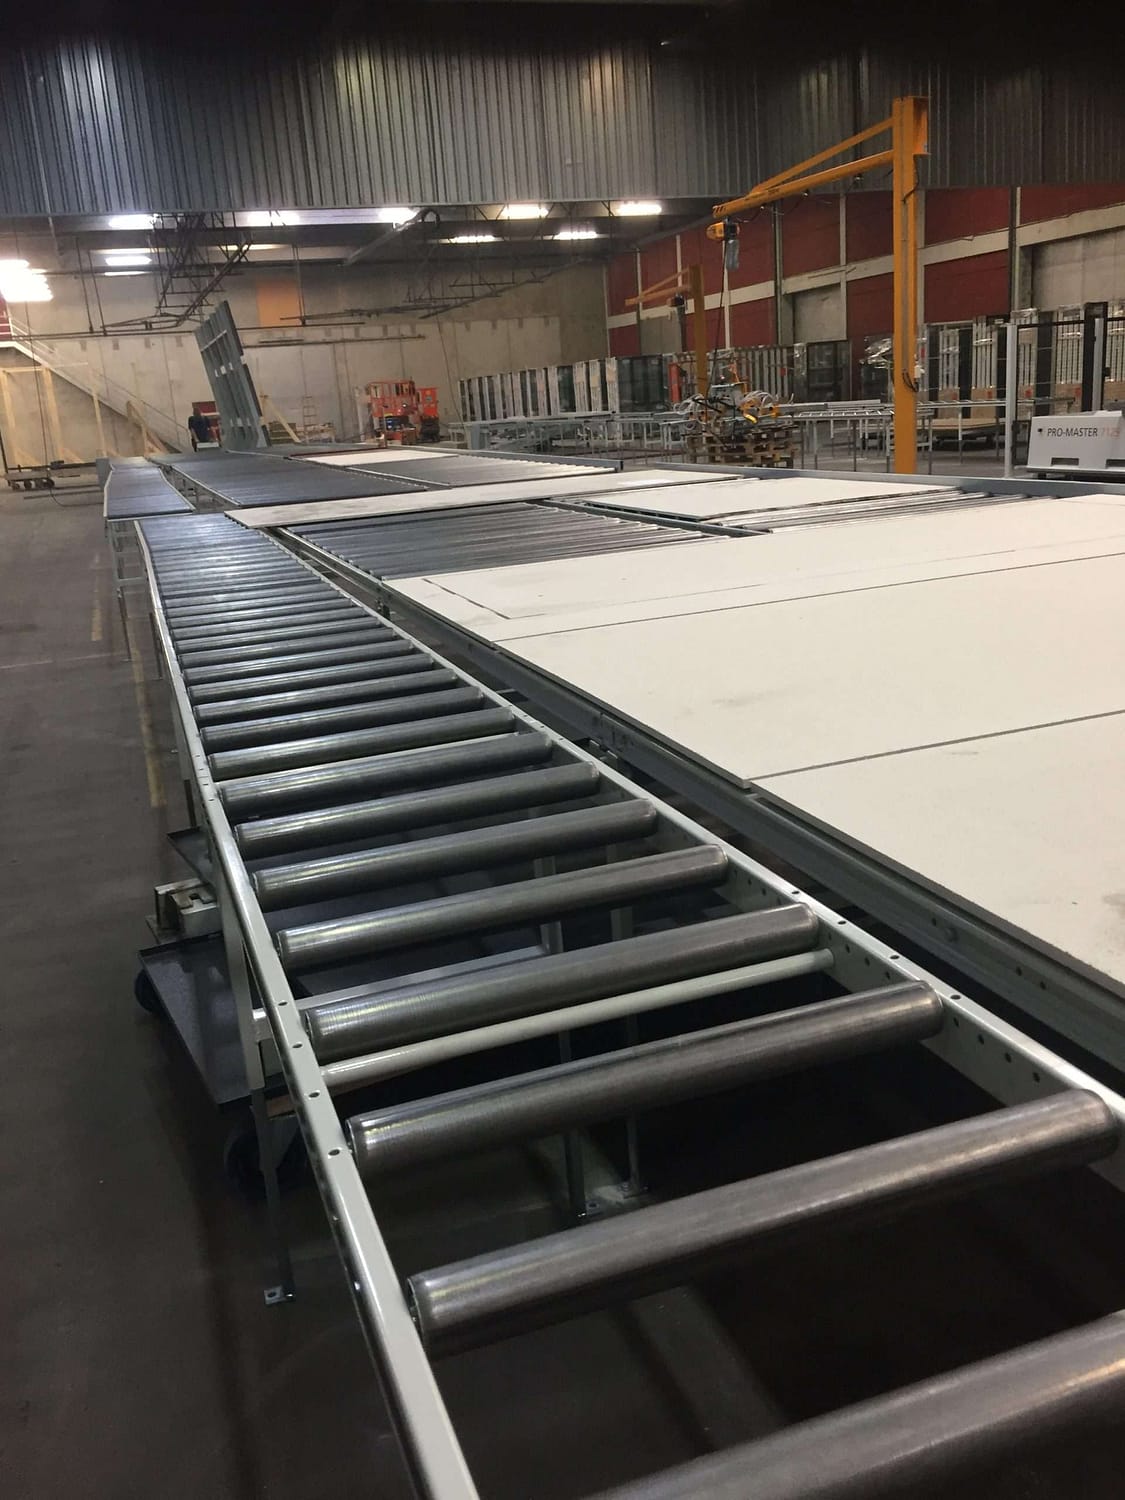 , Efficient Production on Non-Driven Conveyors